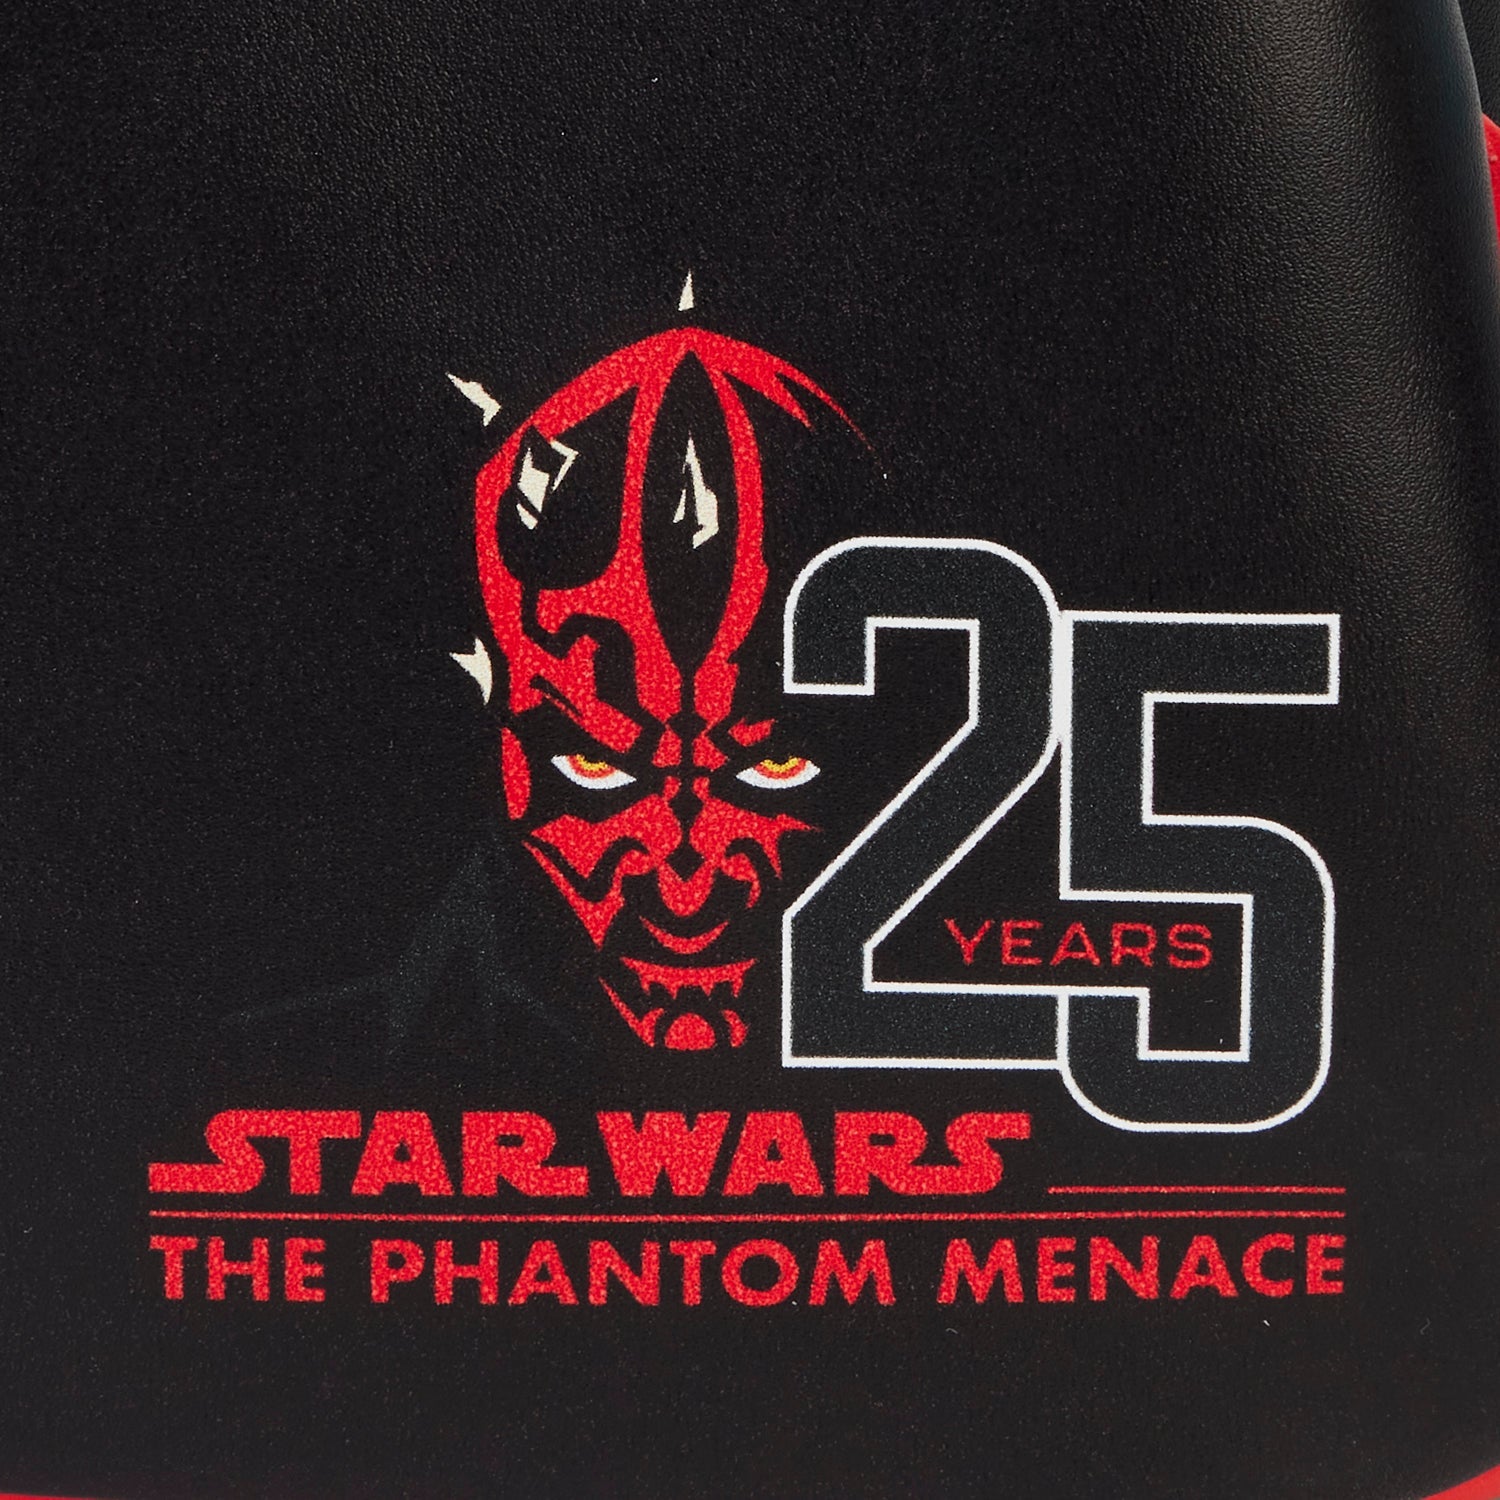 Loungefly x Star Wars Phantom Menace 25th Anniversary Darth Maul Cosplay Mini Backpack - GeekCore